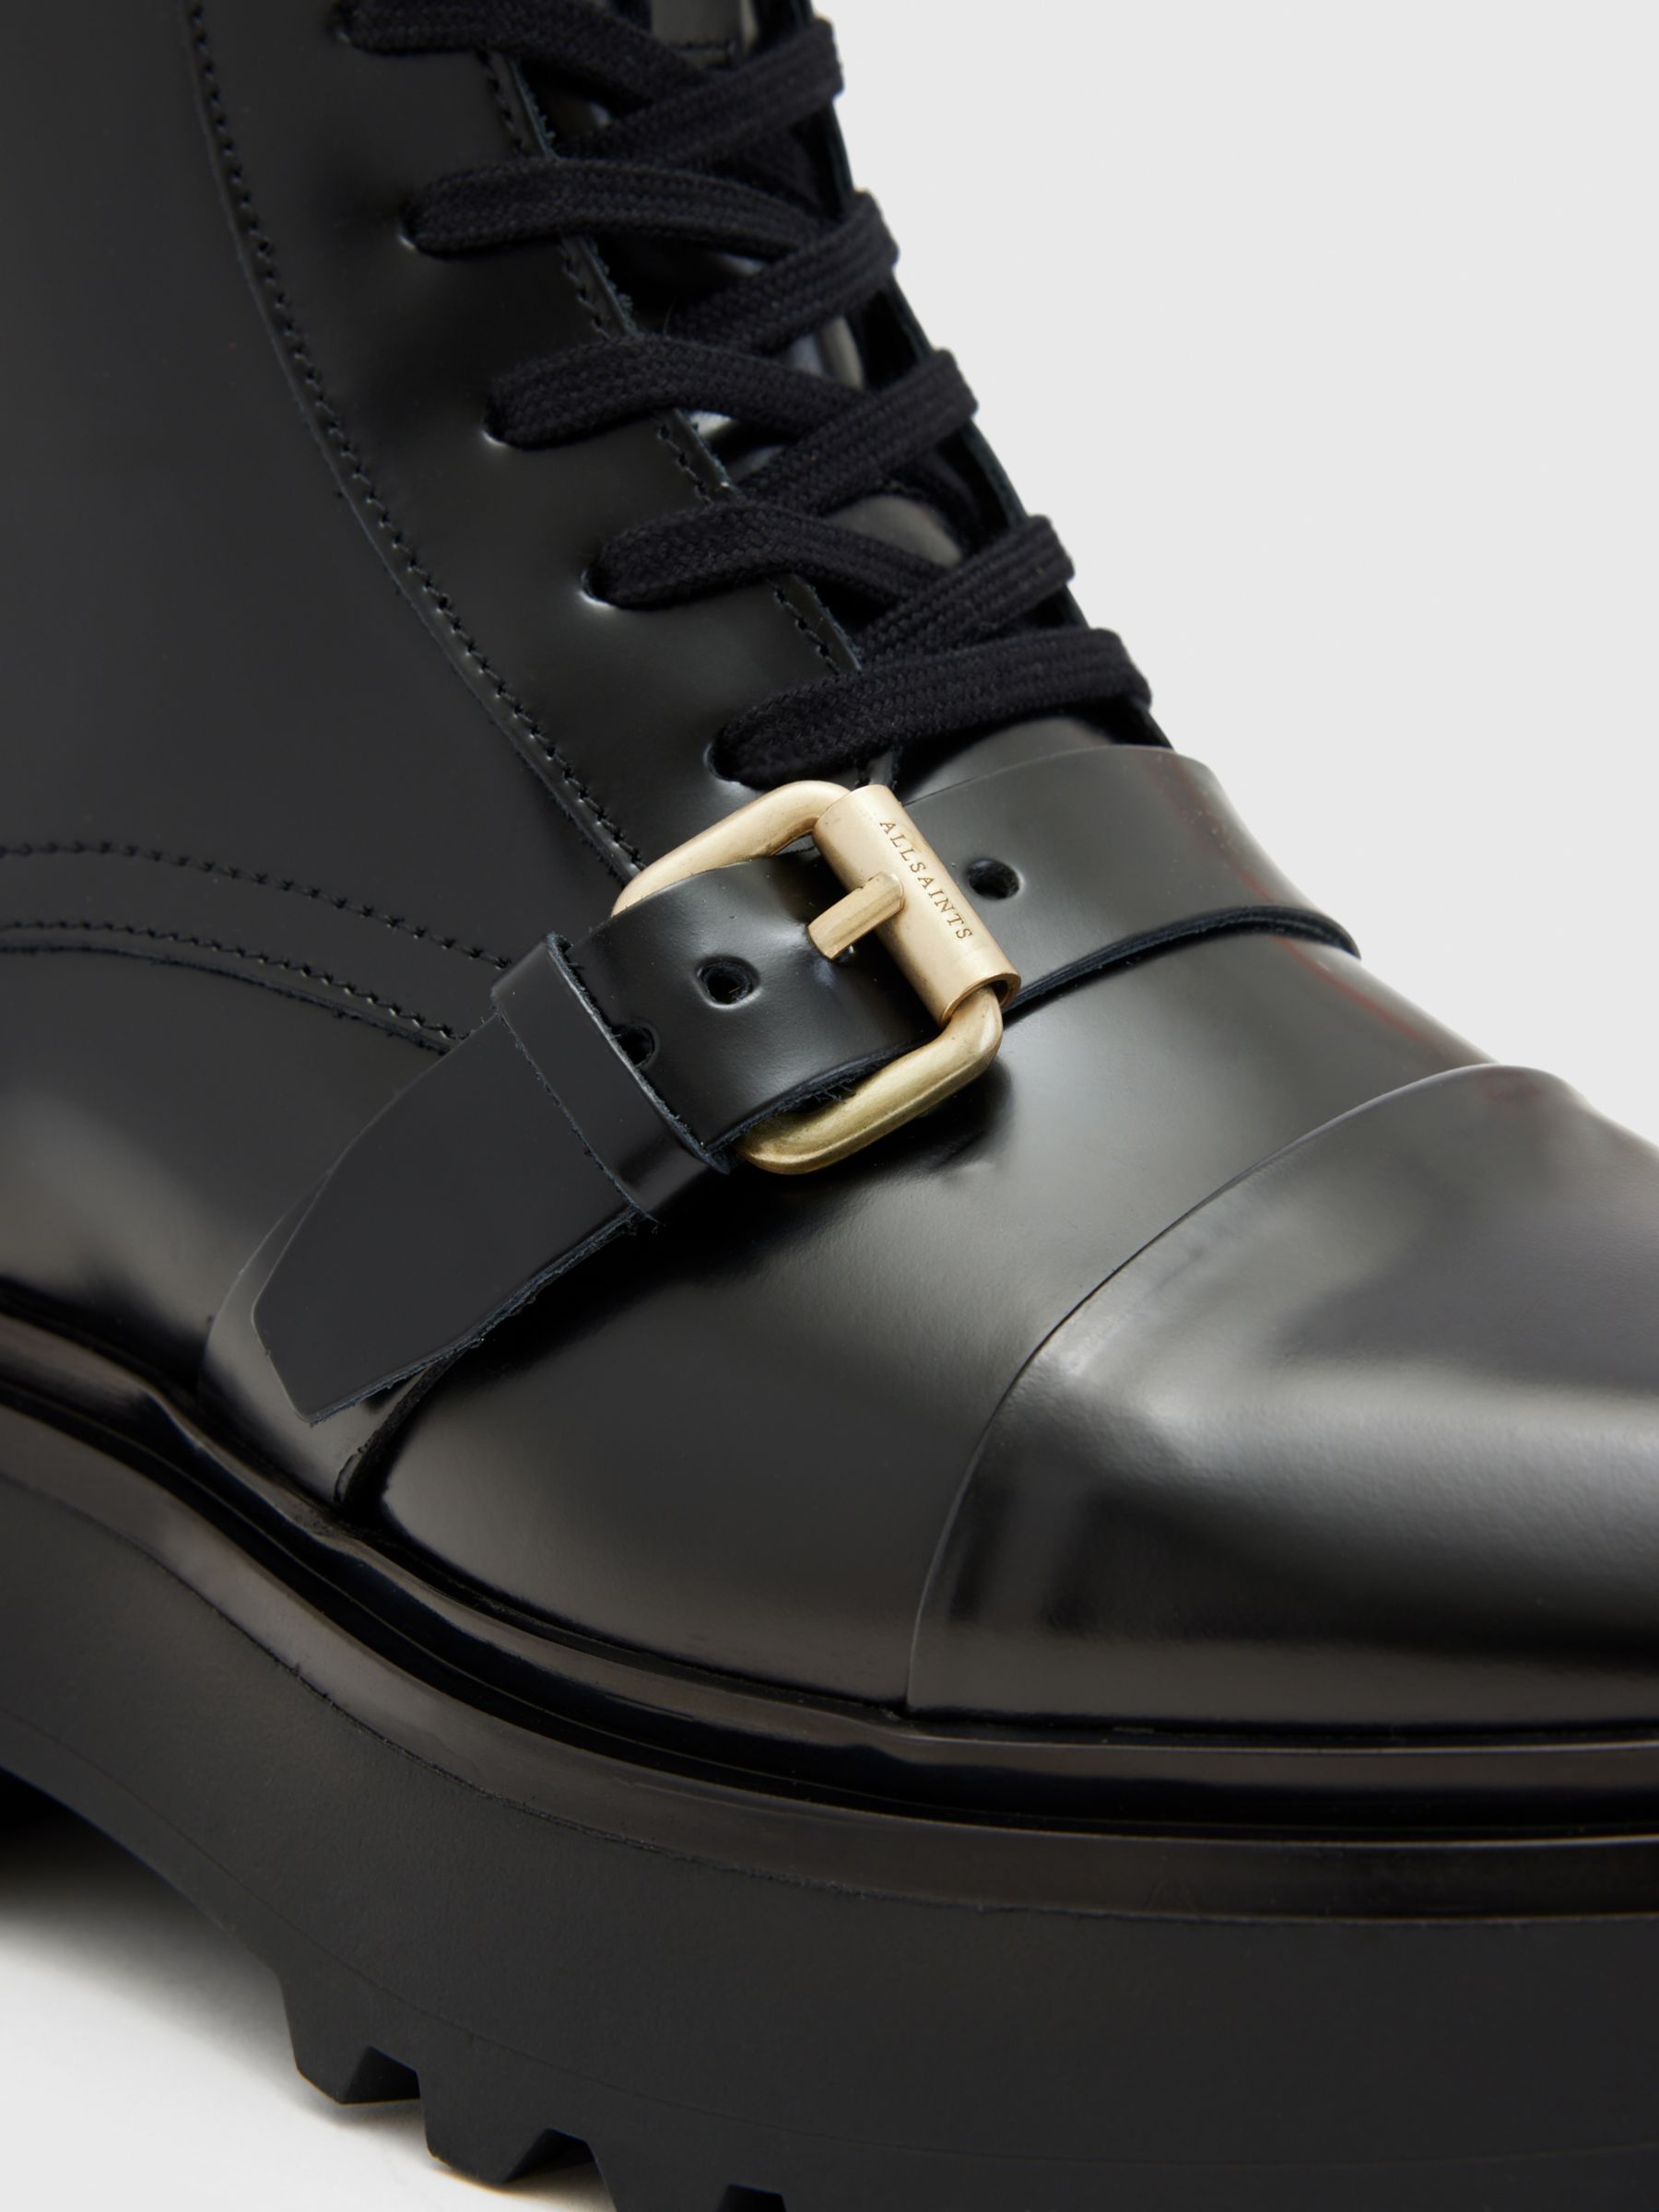 AllSaints Stellar Leather Ankle Boots, Black/Warm Brass, EU38